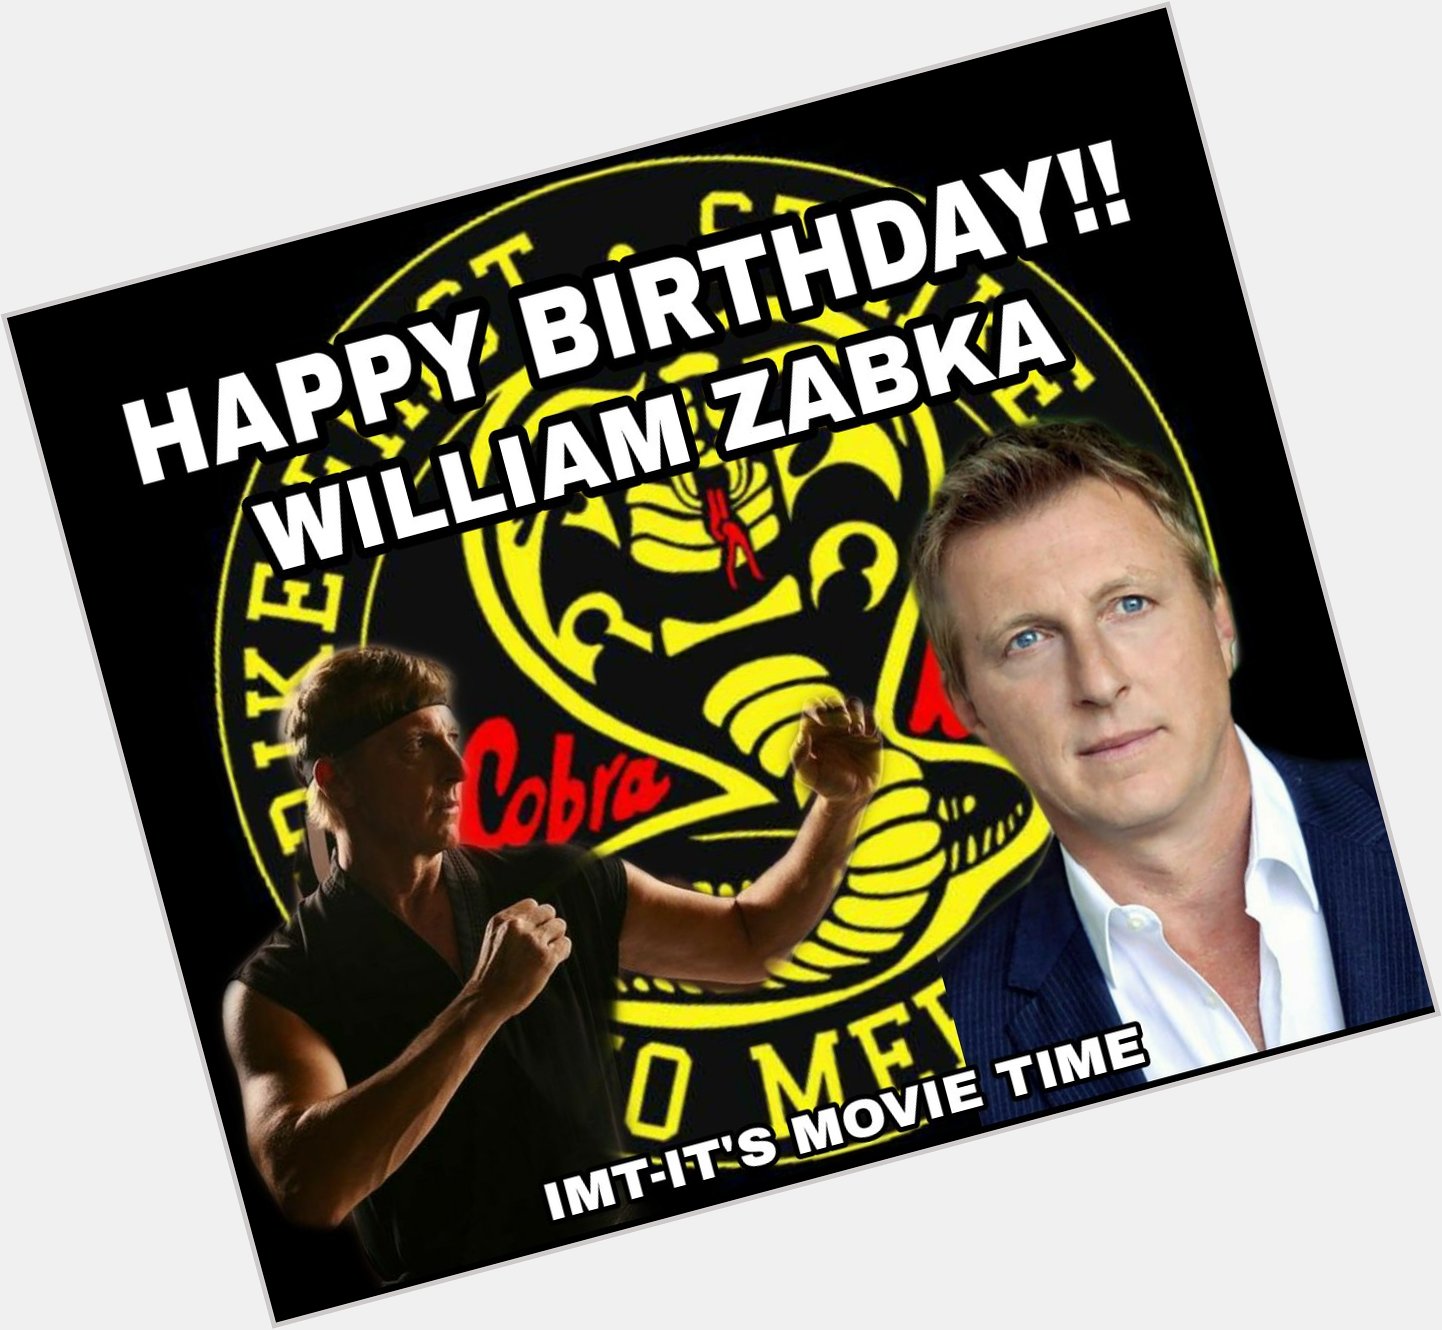 Happy Birthday to William Zabka! He is celebrating 55 years. 